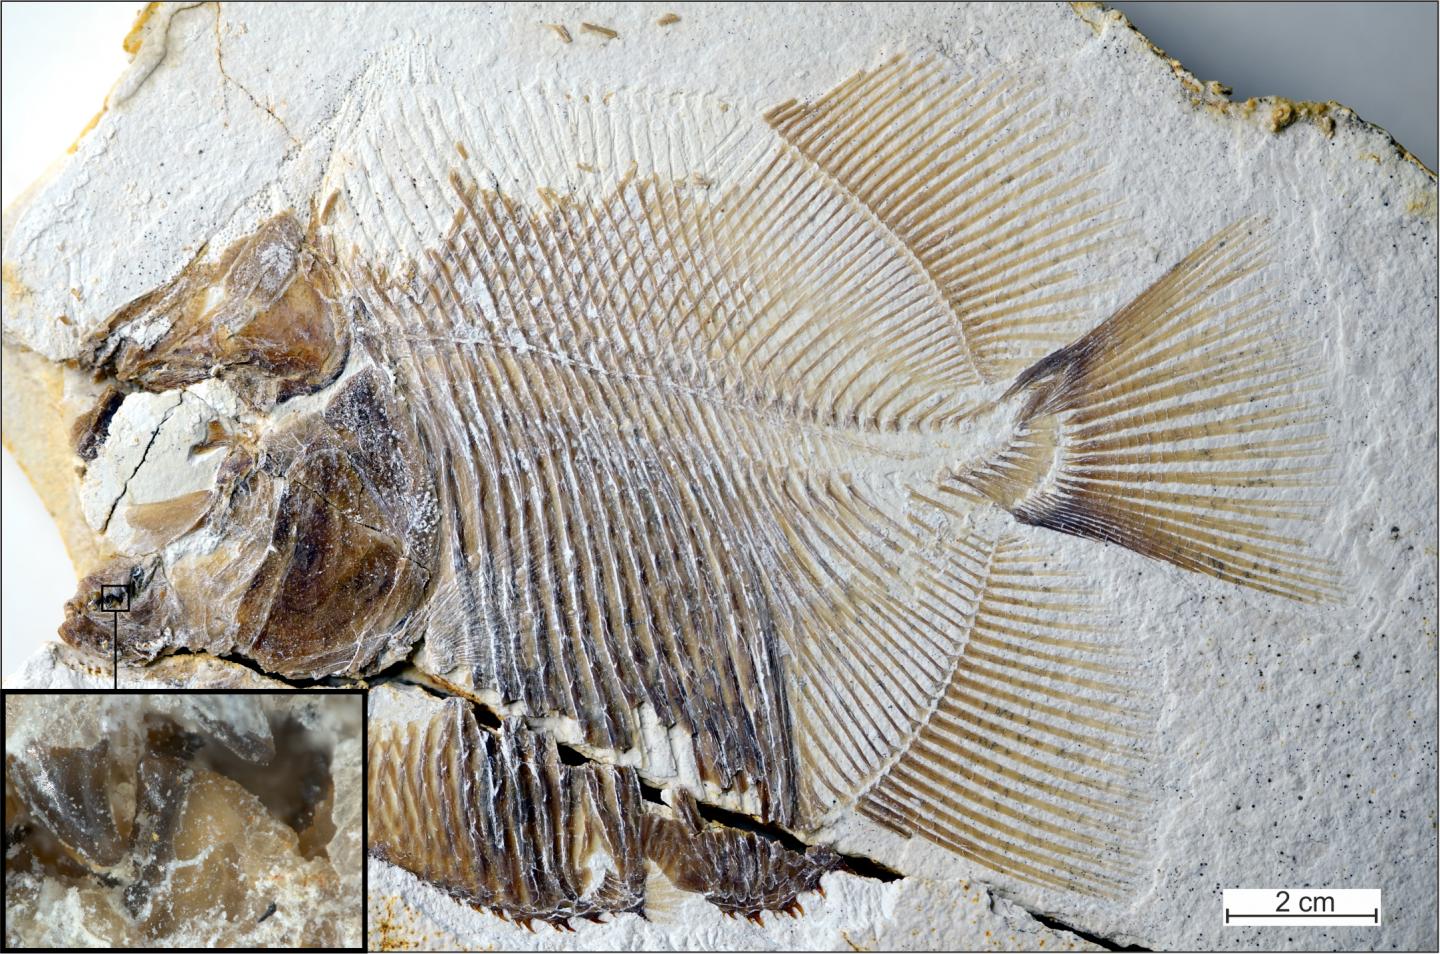 Newly Identified Piranha-Like Fish from the Jurassic